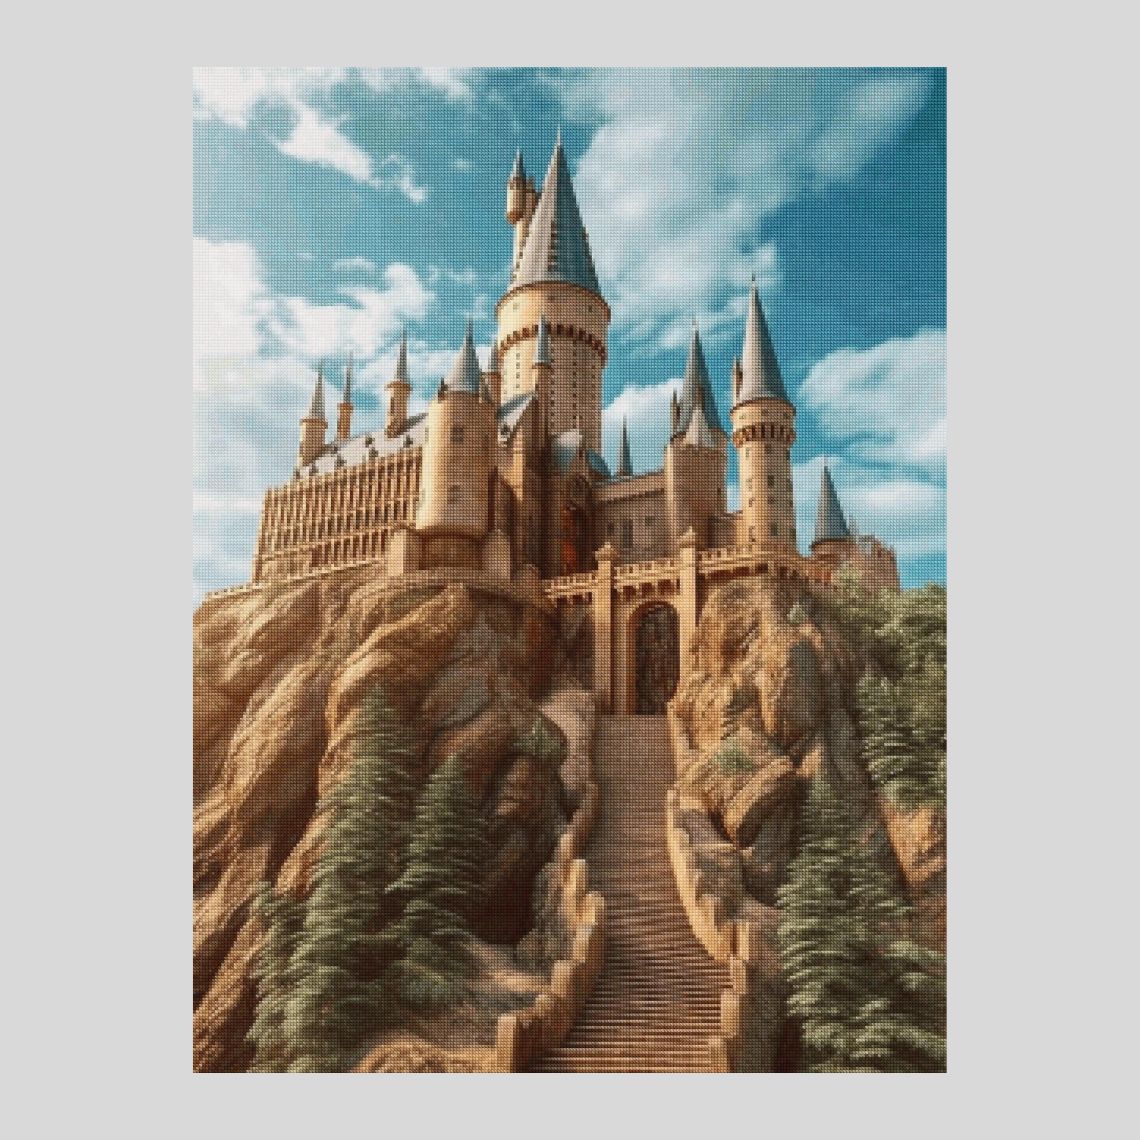 Harry Potter Hogwarts Castle - 5D Diamond Painting